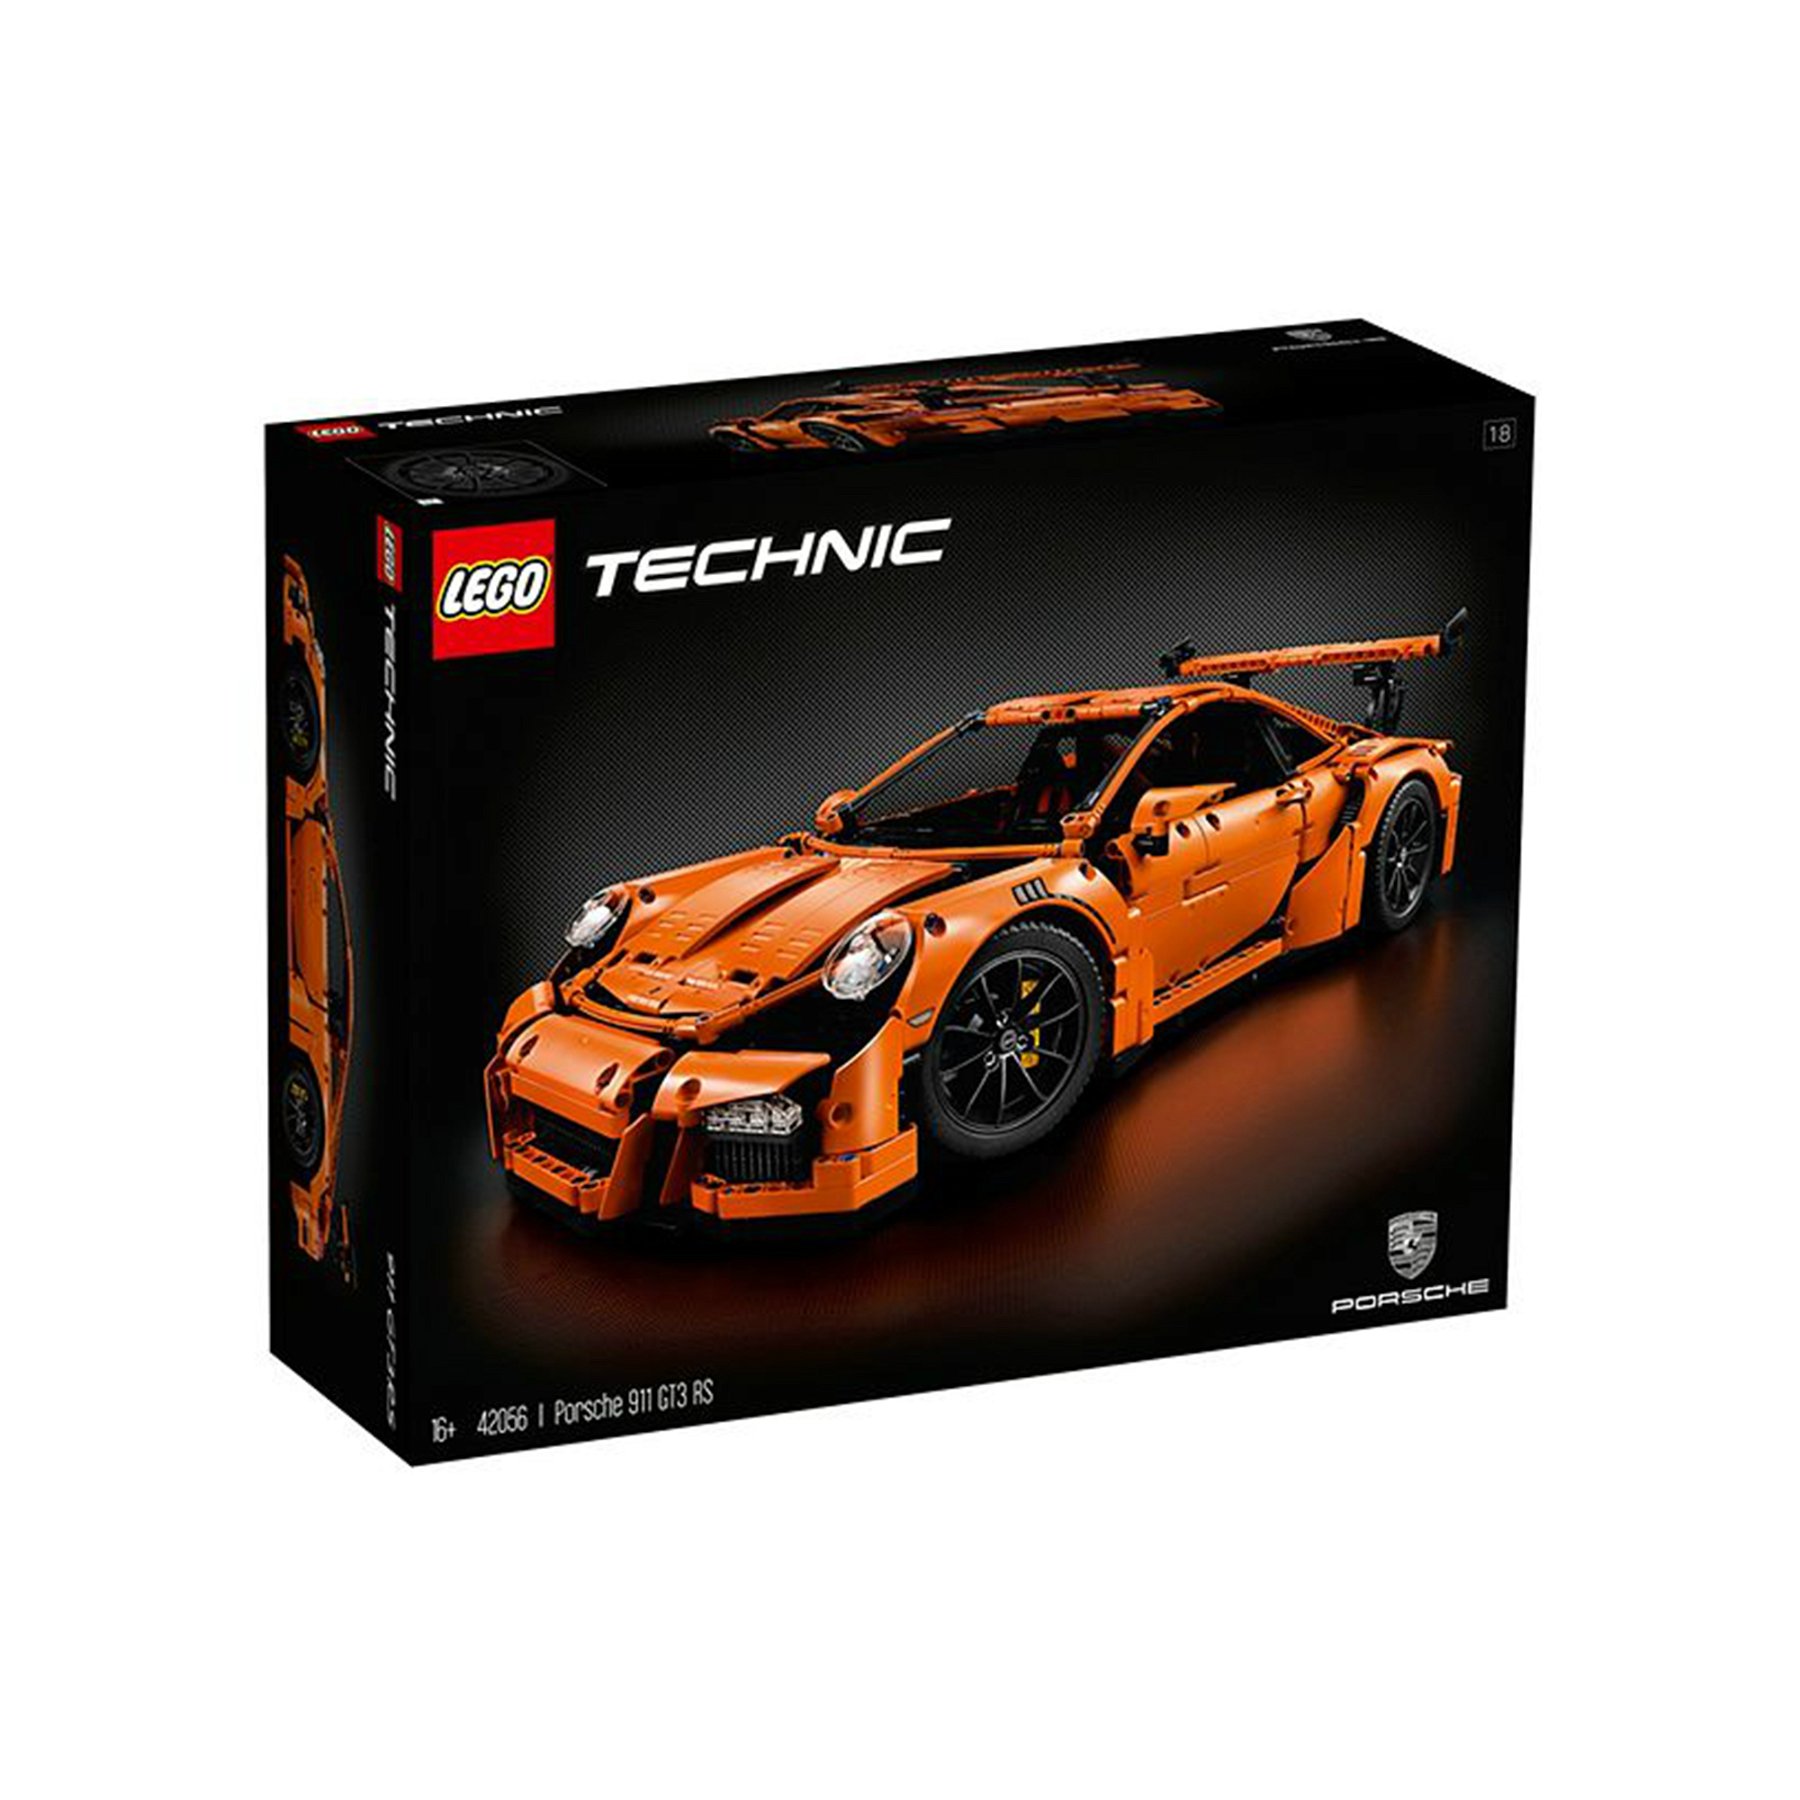 Porsche 911 Gt3 Rs Lego Technic